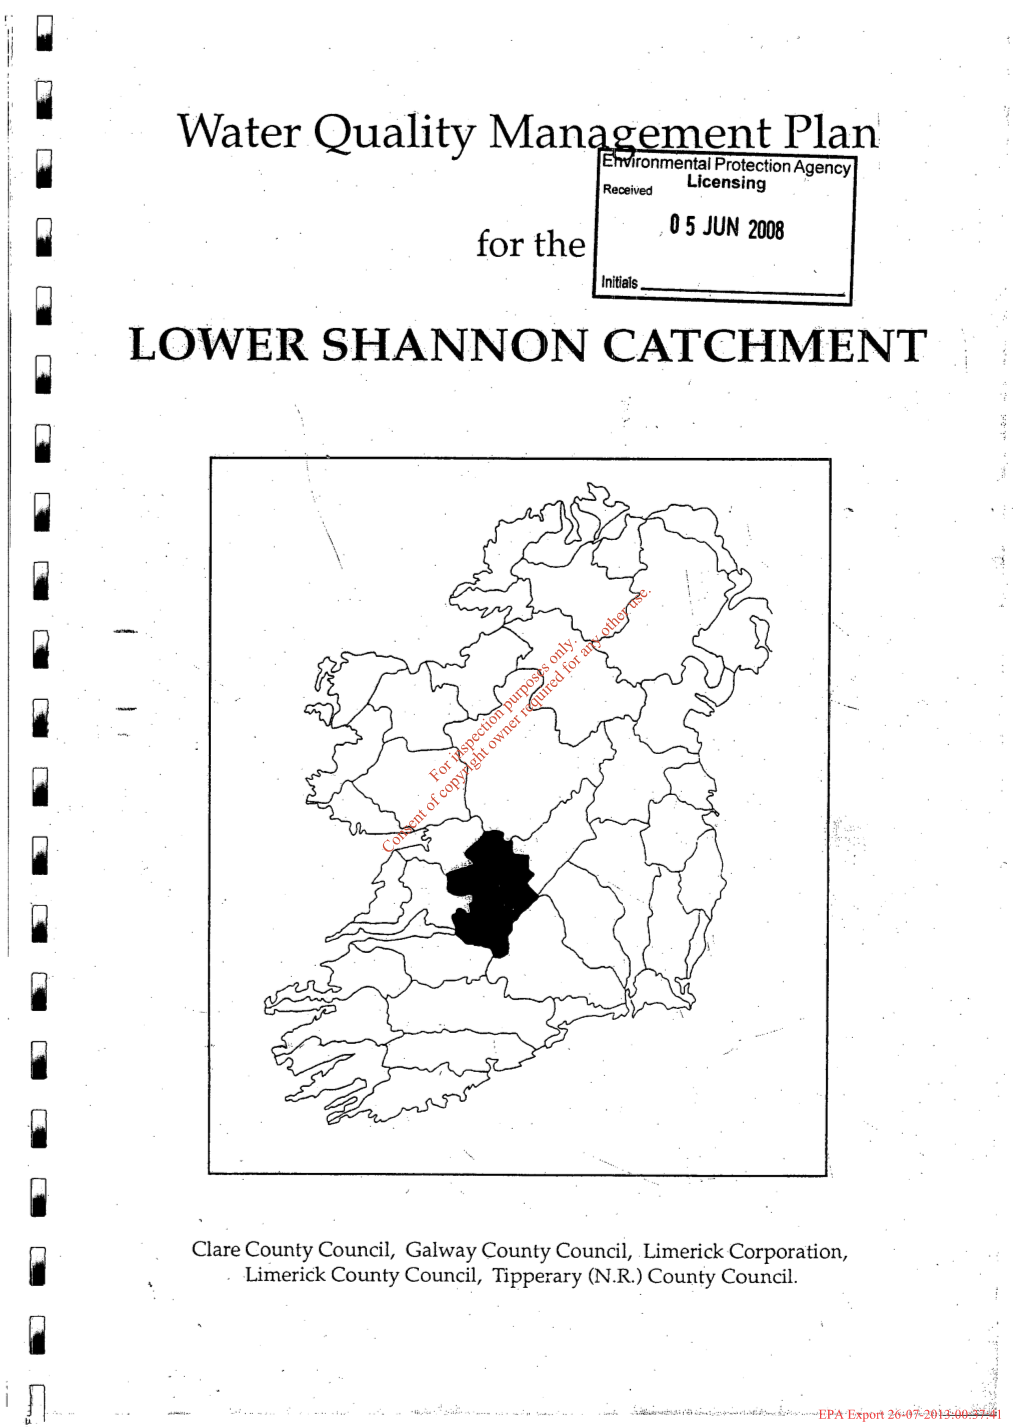 Lower Shannon Catchment , B